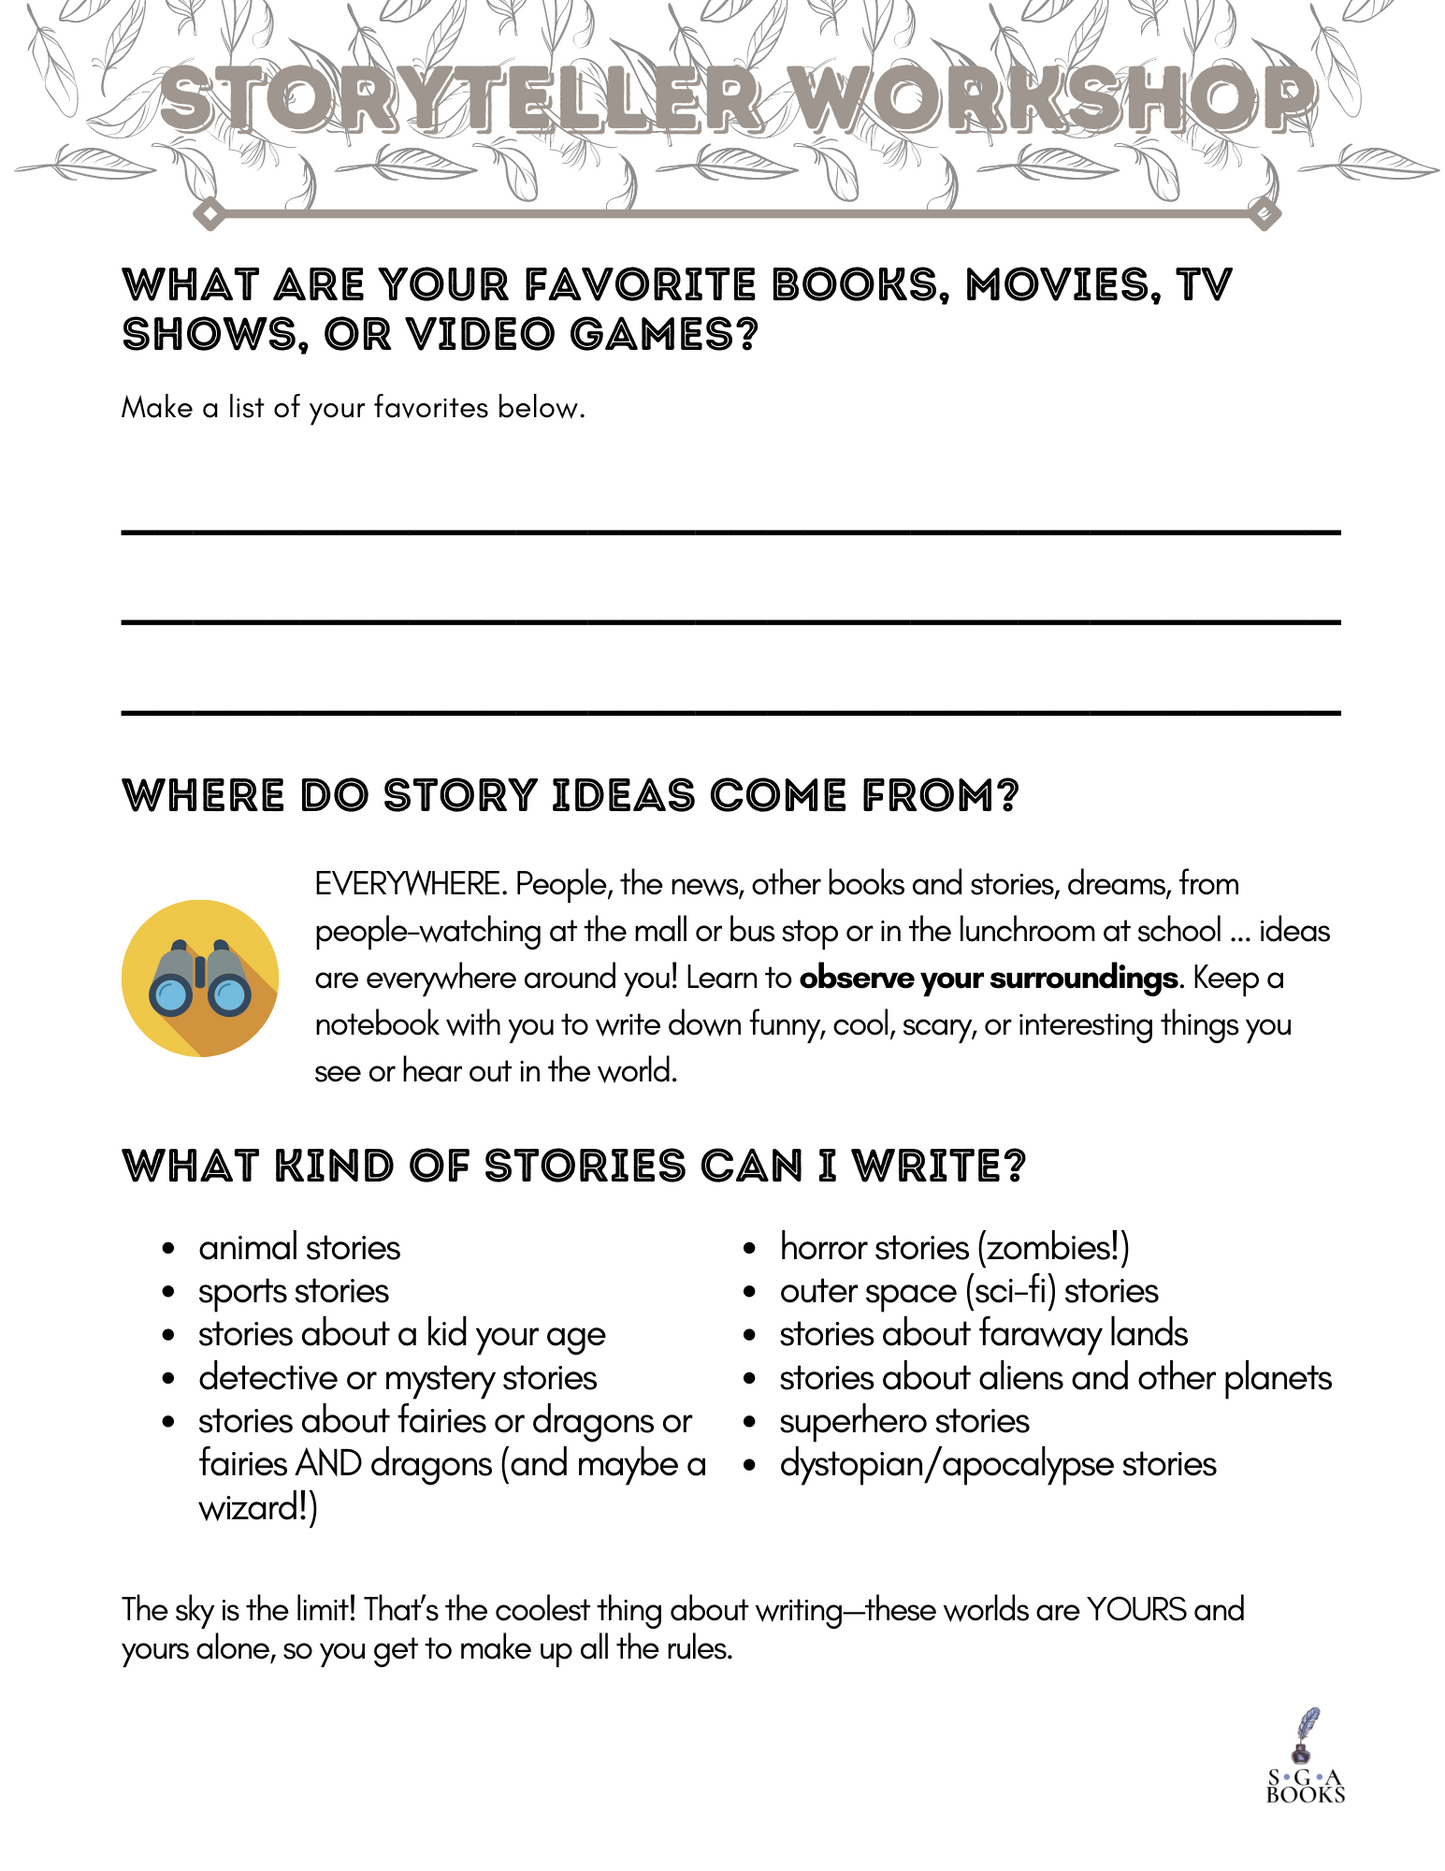 Storyteller Workshop PDF for Elementary and Middle School